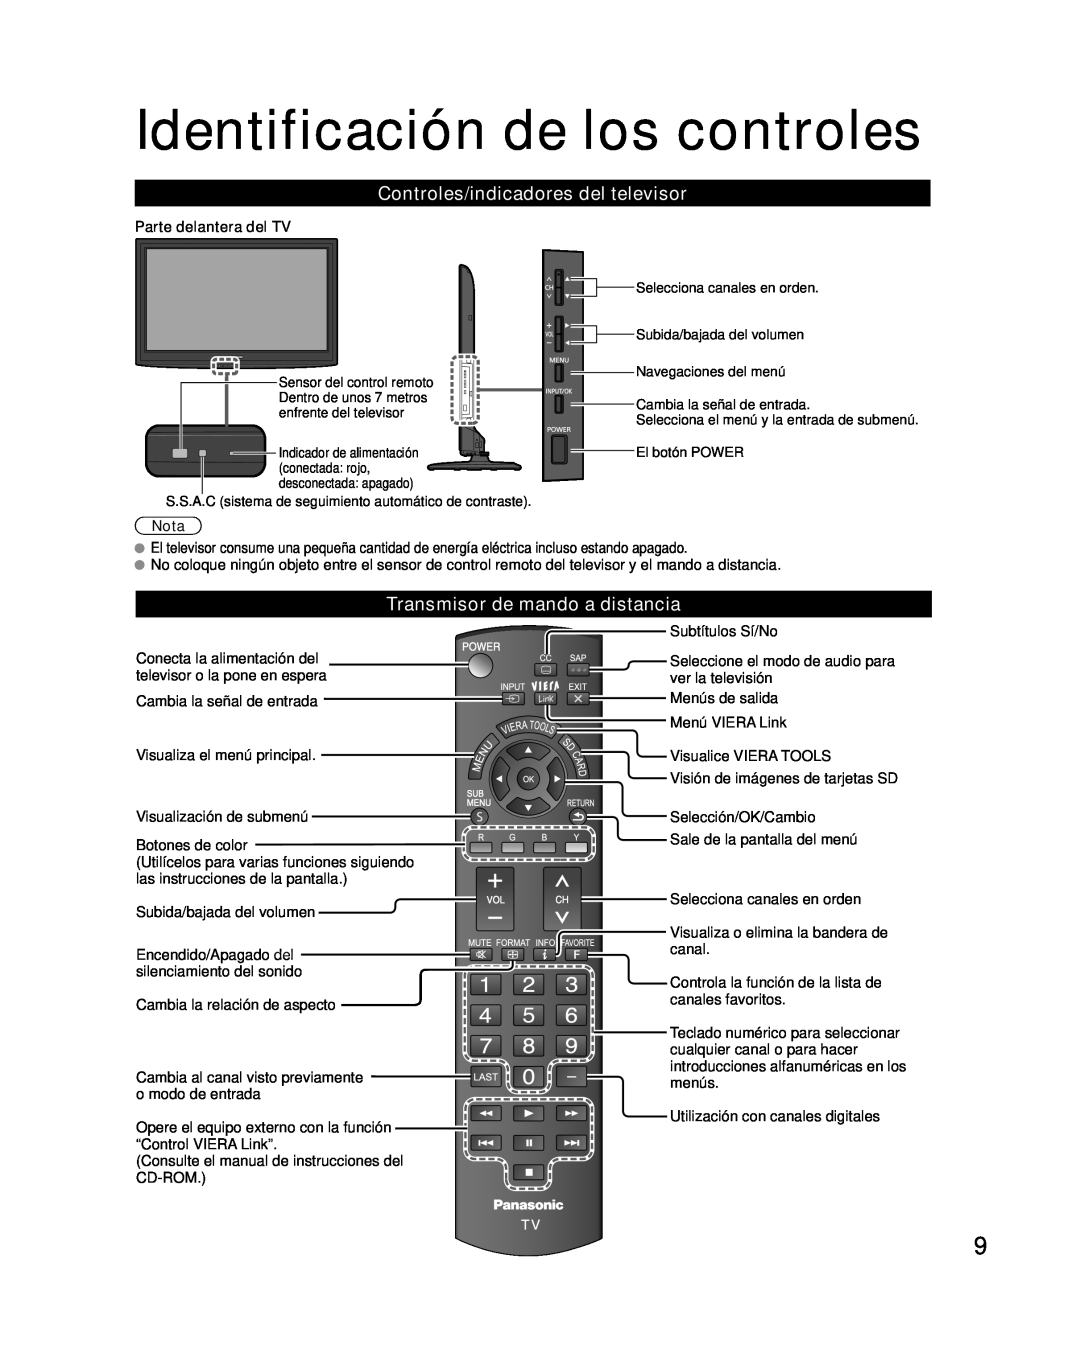 Panasonic TQB2AA0580 Identificación de los controles, Controles/indicadores del televisor, Transmisor de mando a distancia 